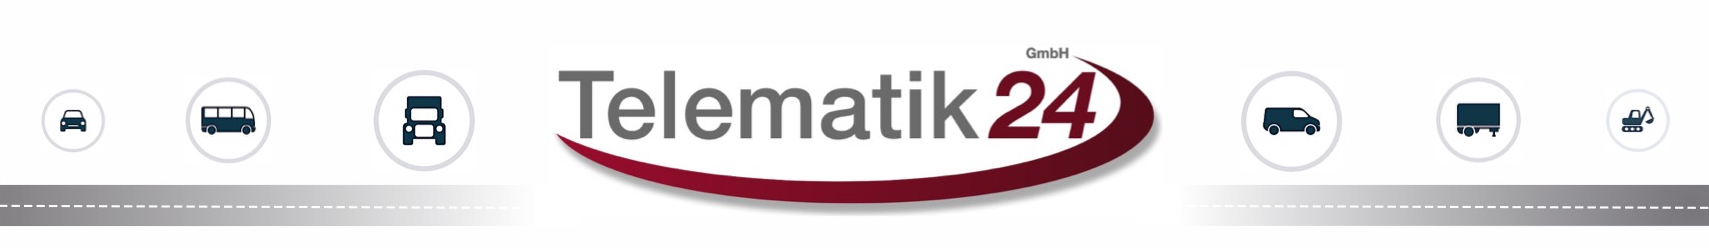 Telematik24-Onlinestore